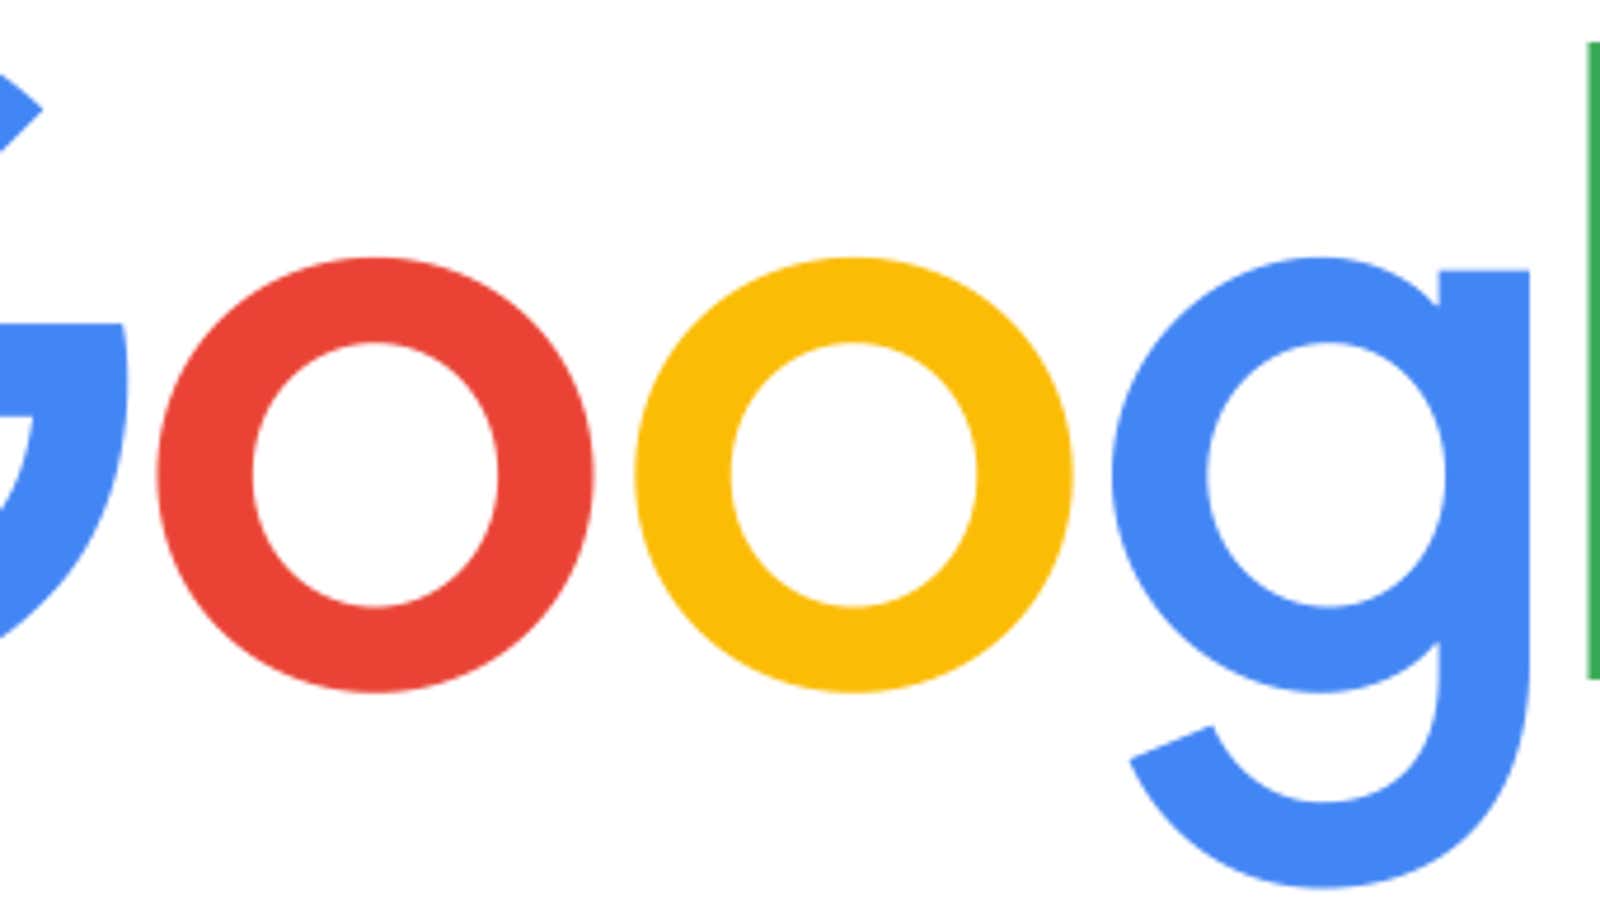 Google has unveiled a new logo